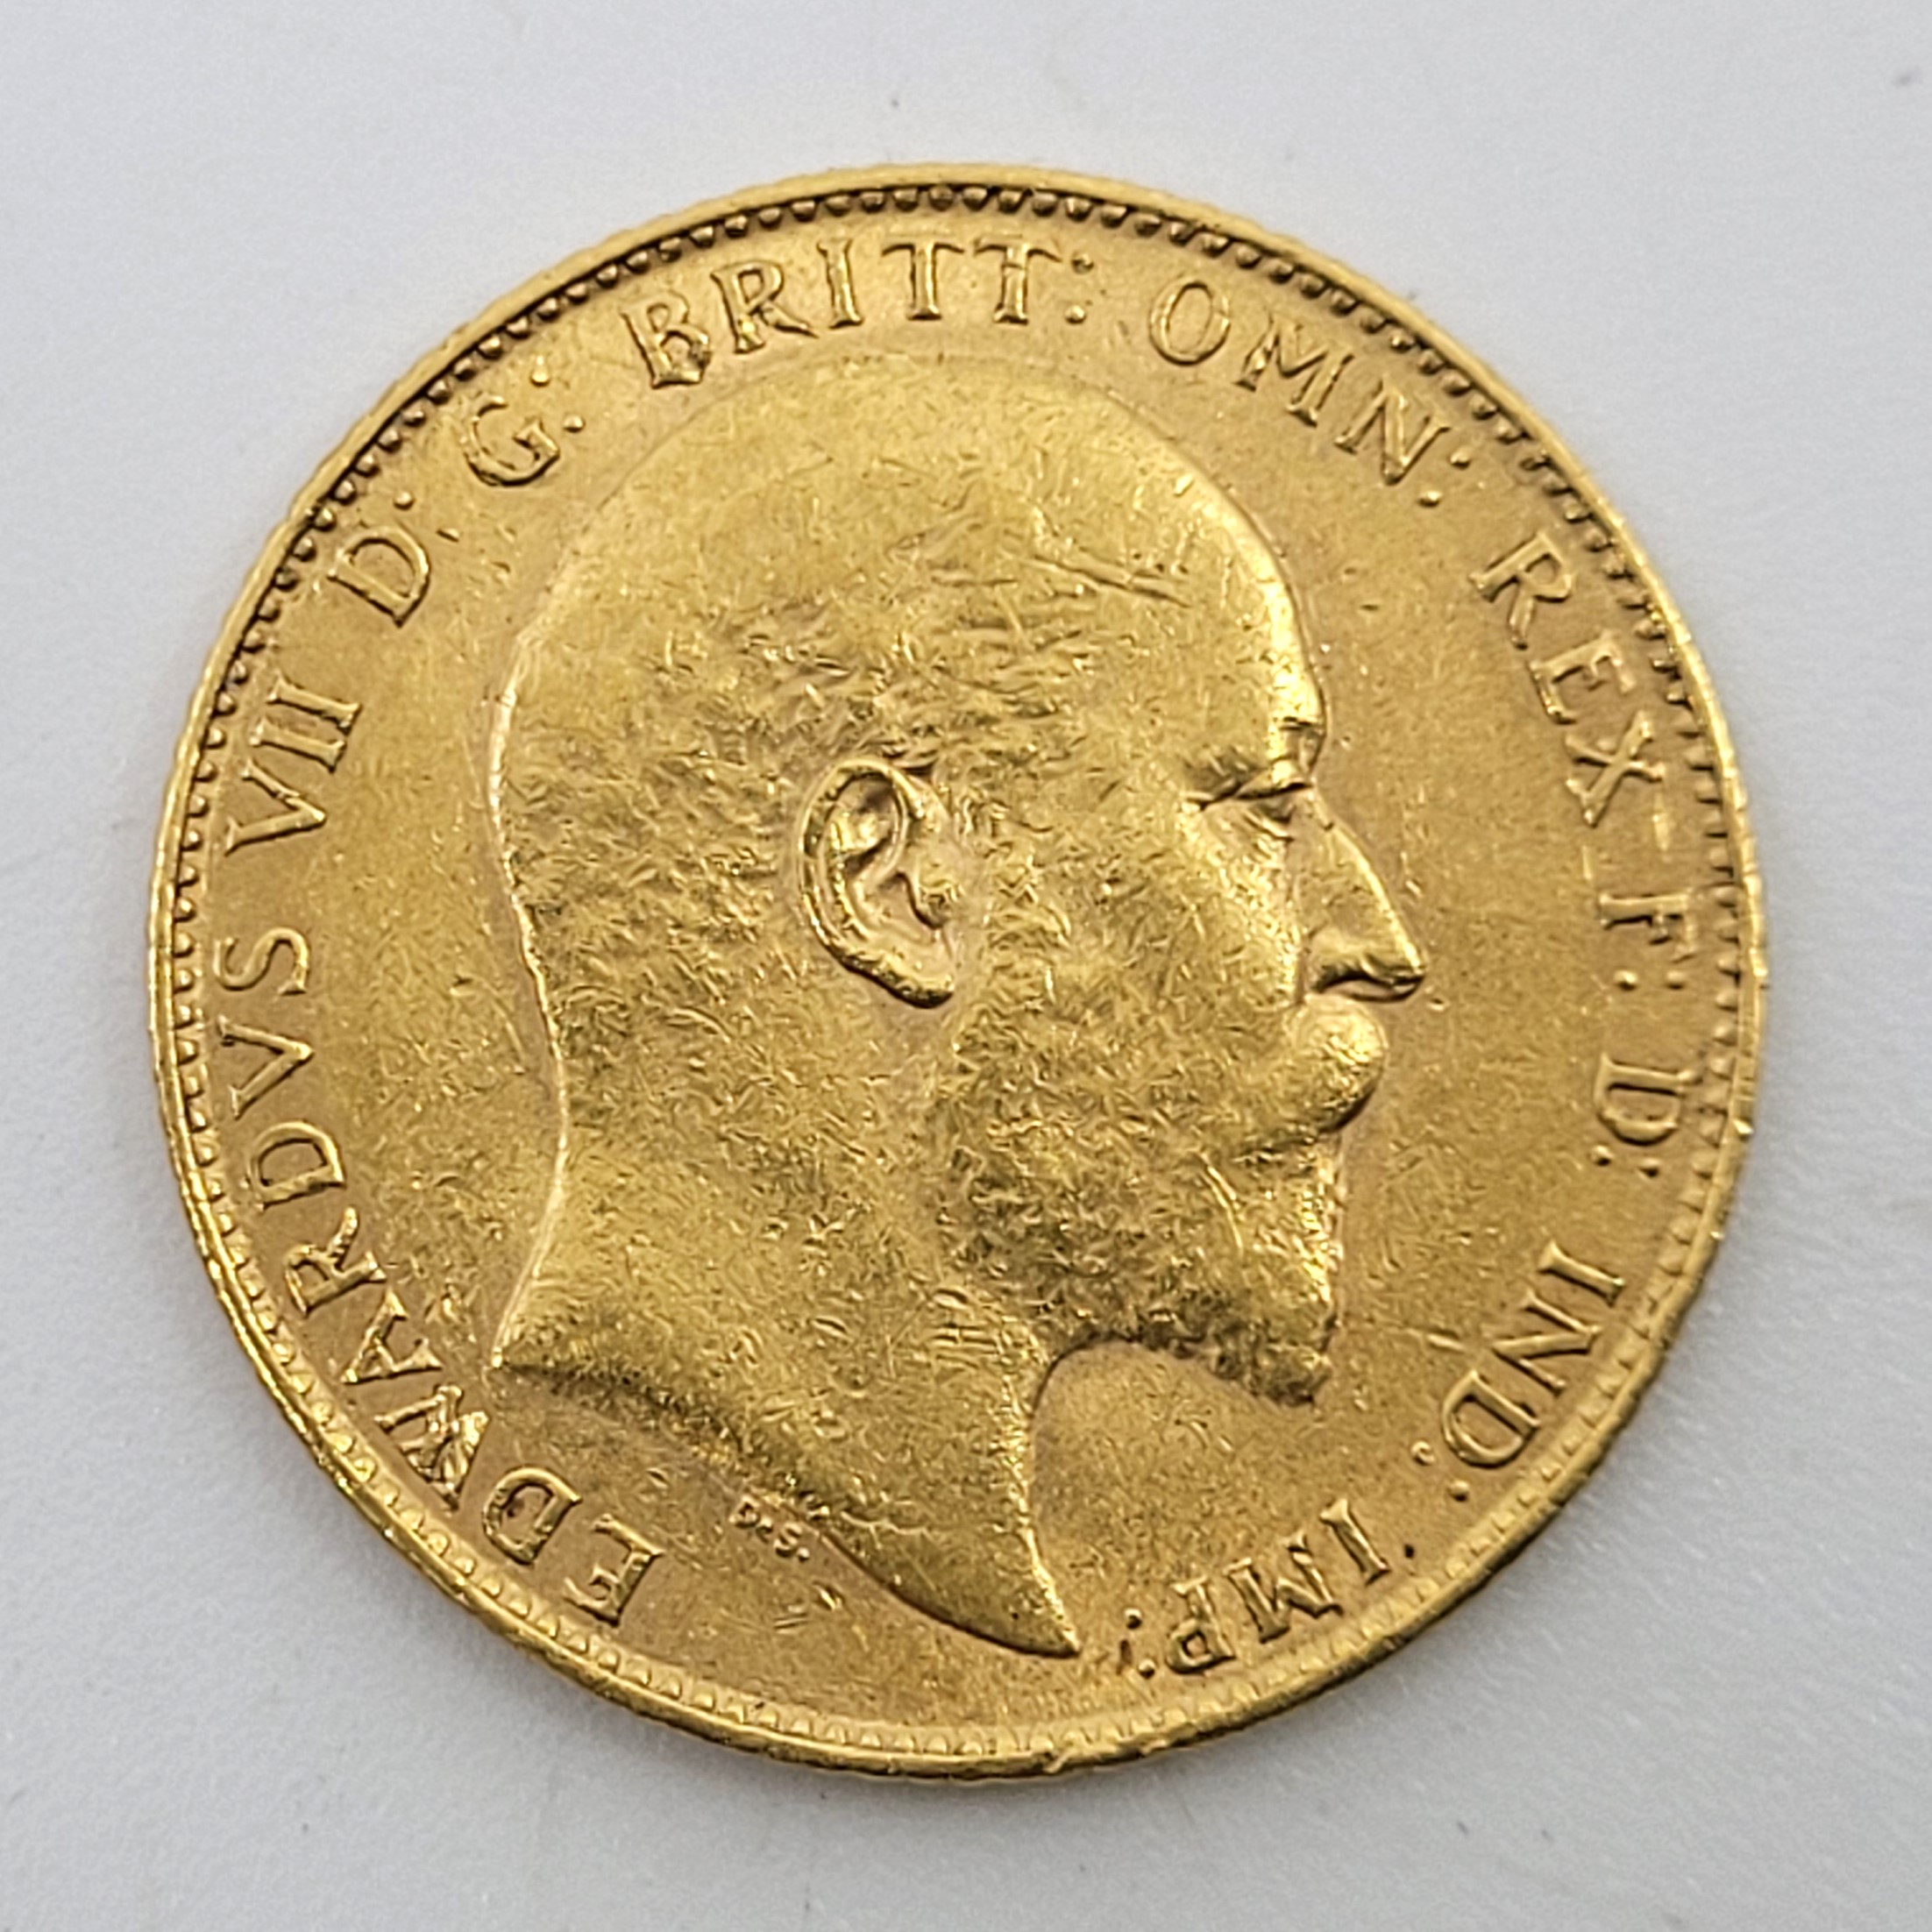 An Edward VII 1904 gold sovereign coin, London mint.